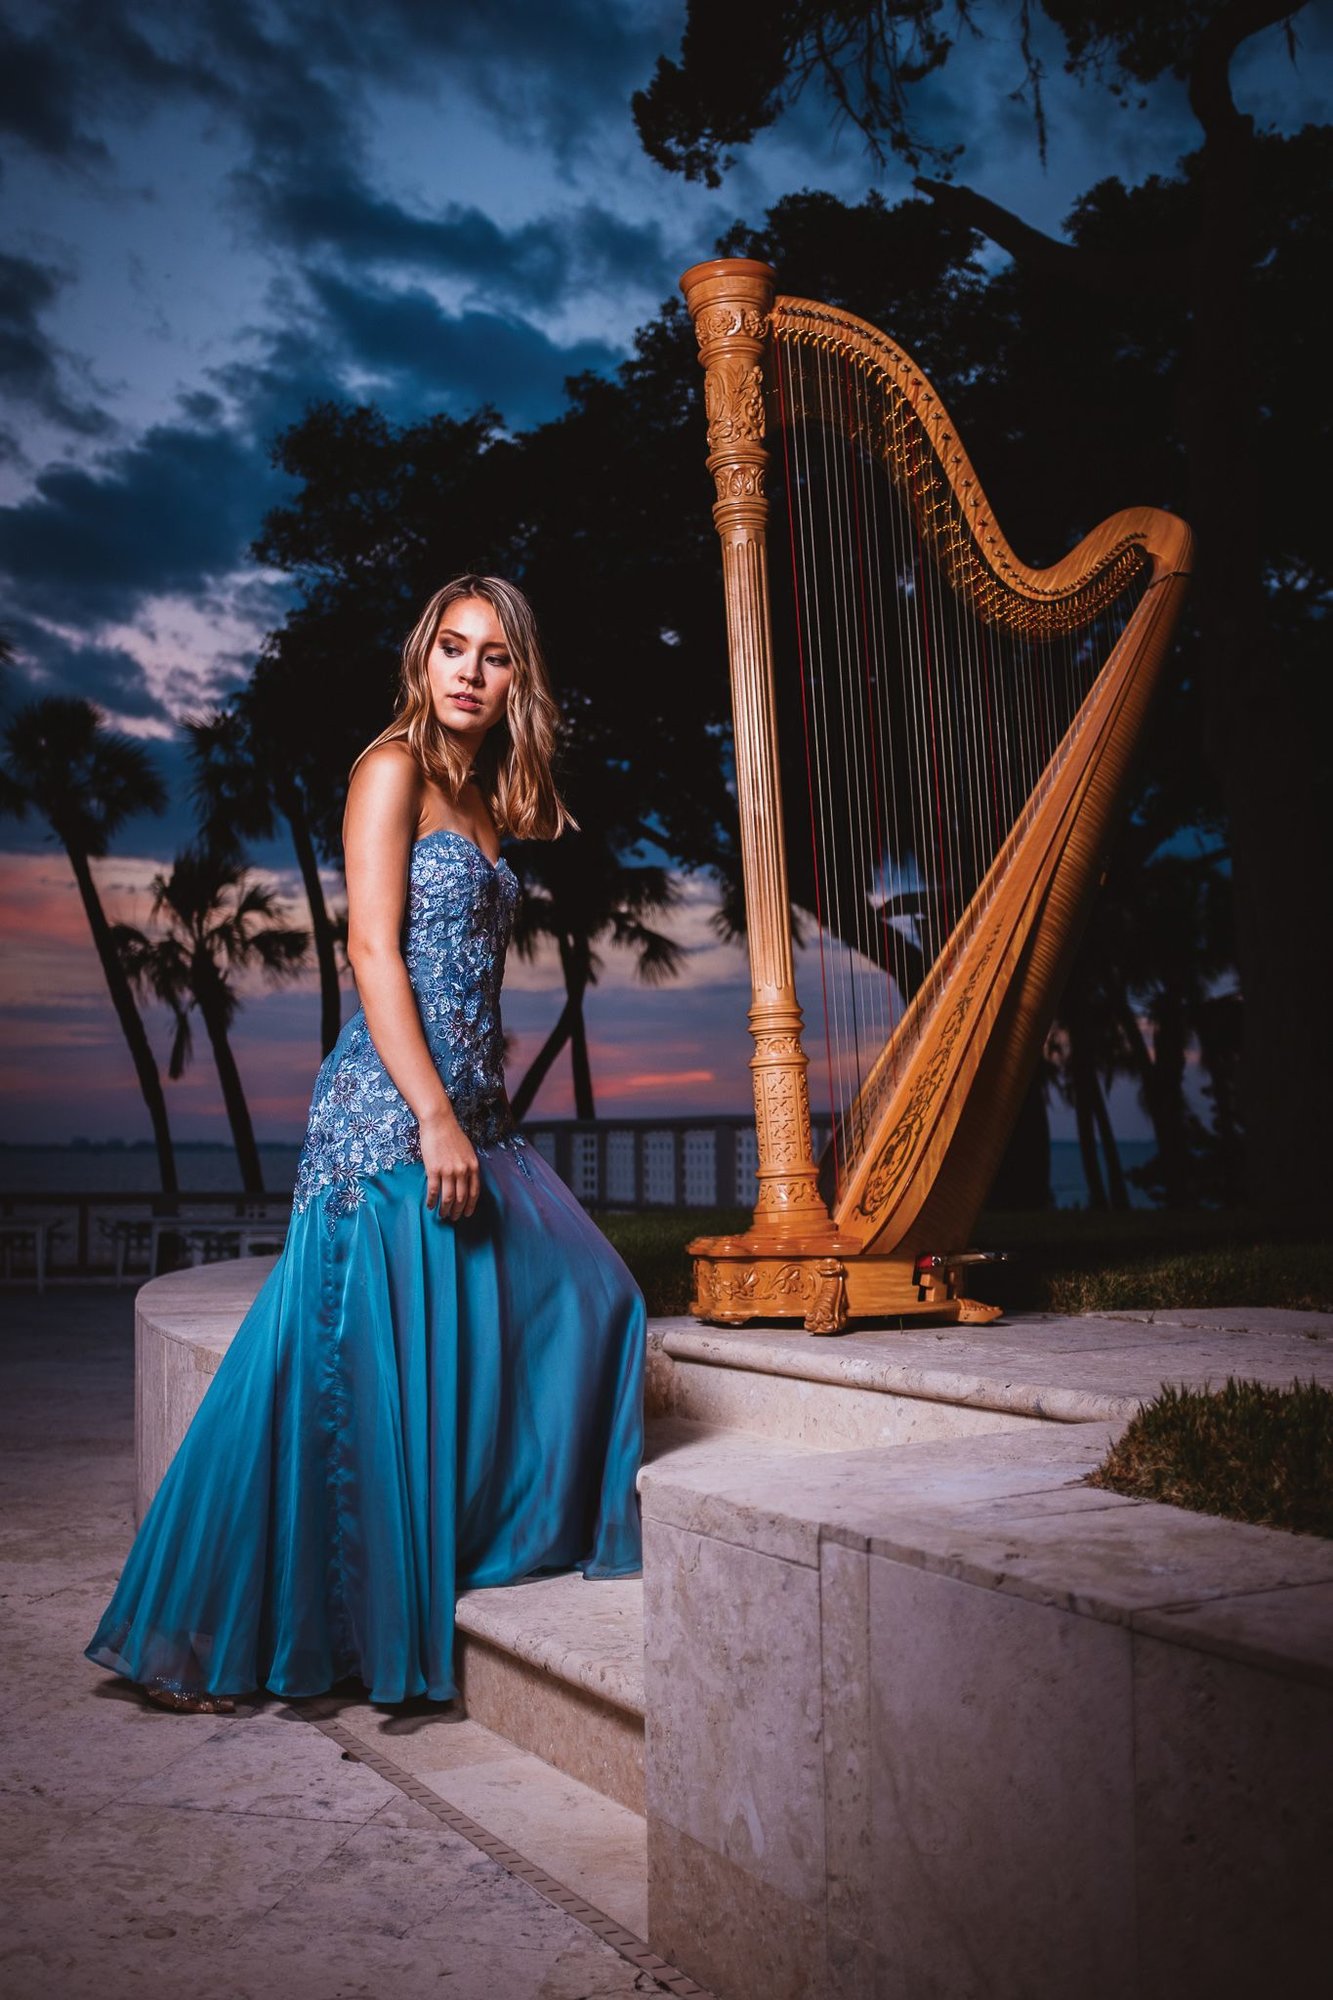 Sarasota Orchestra Harp